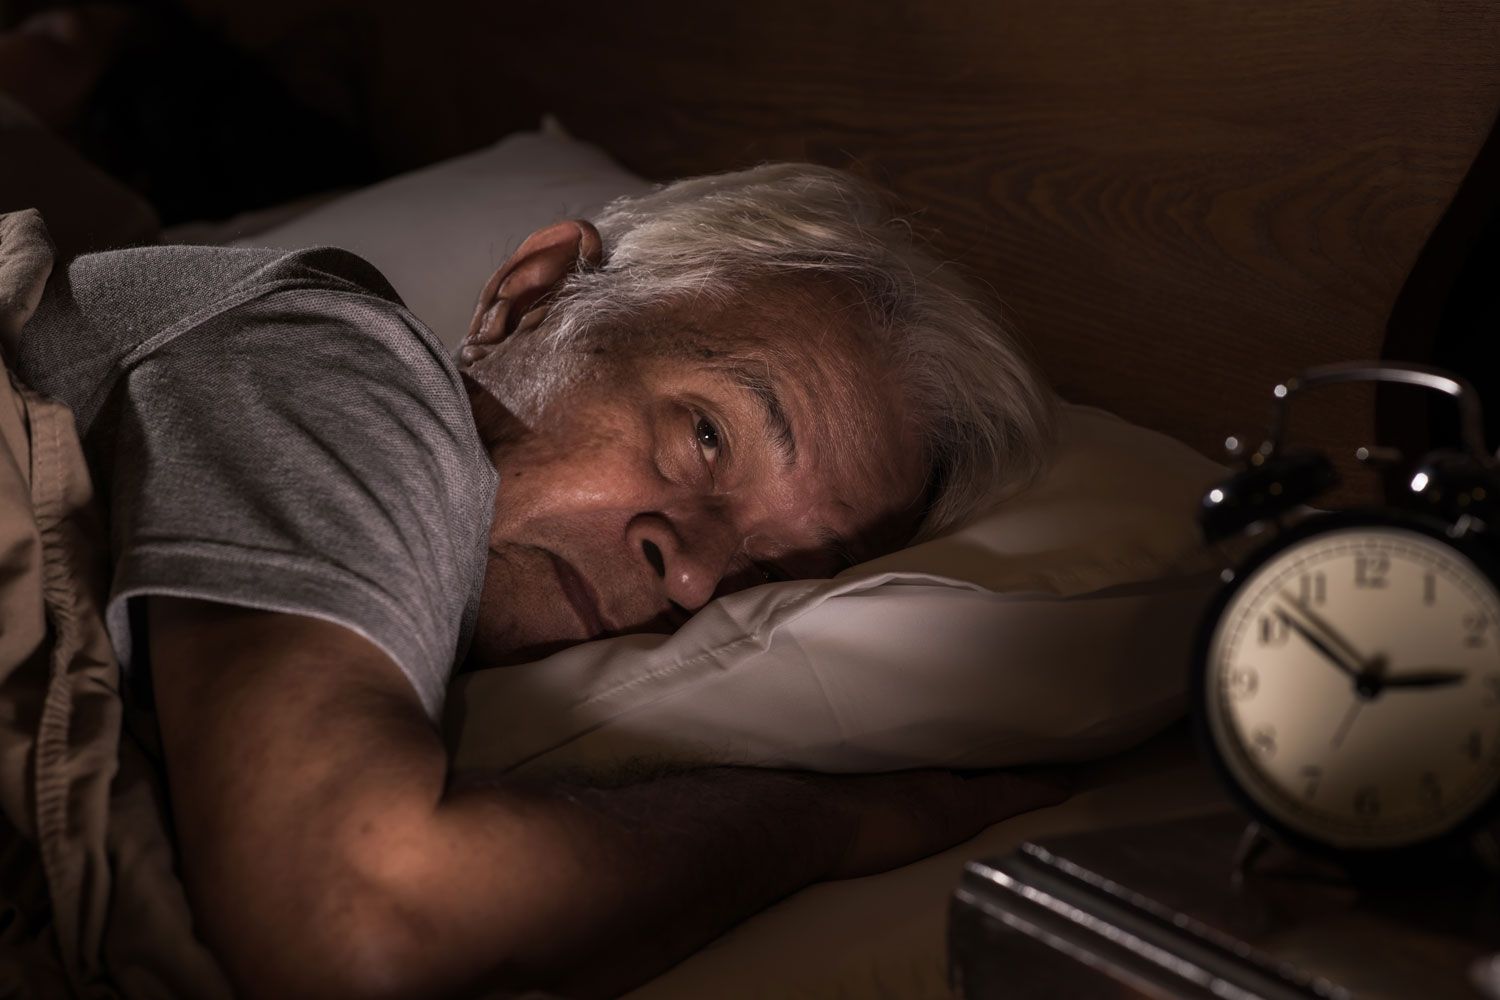 man in bed wth alarm clock